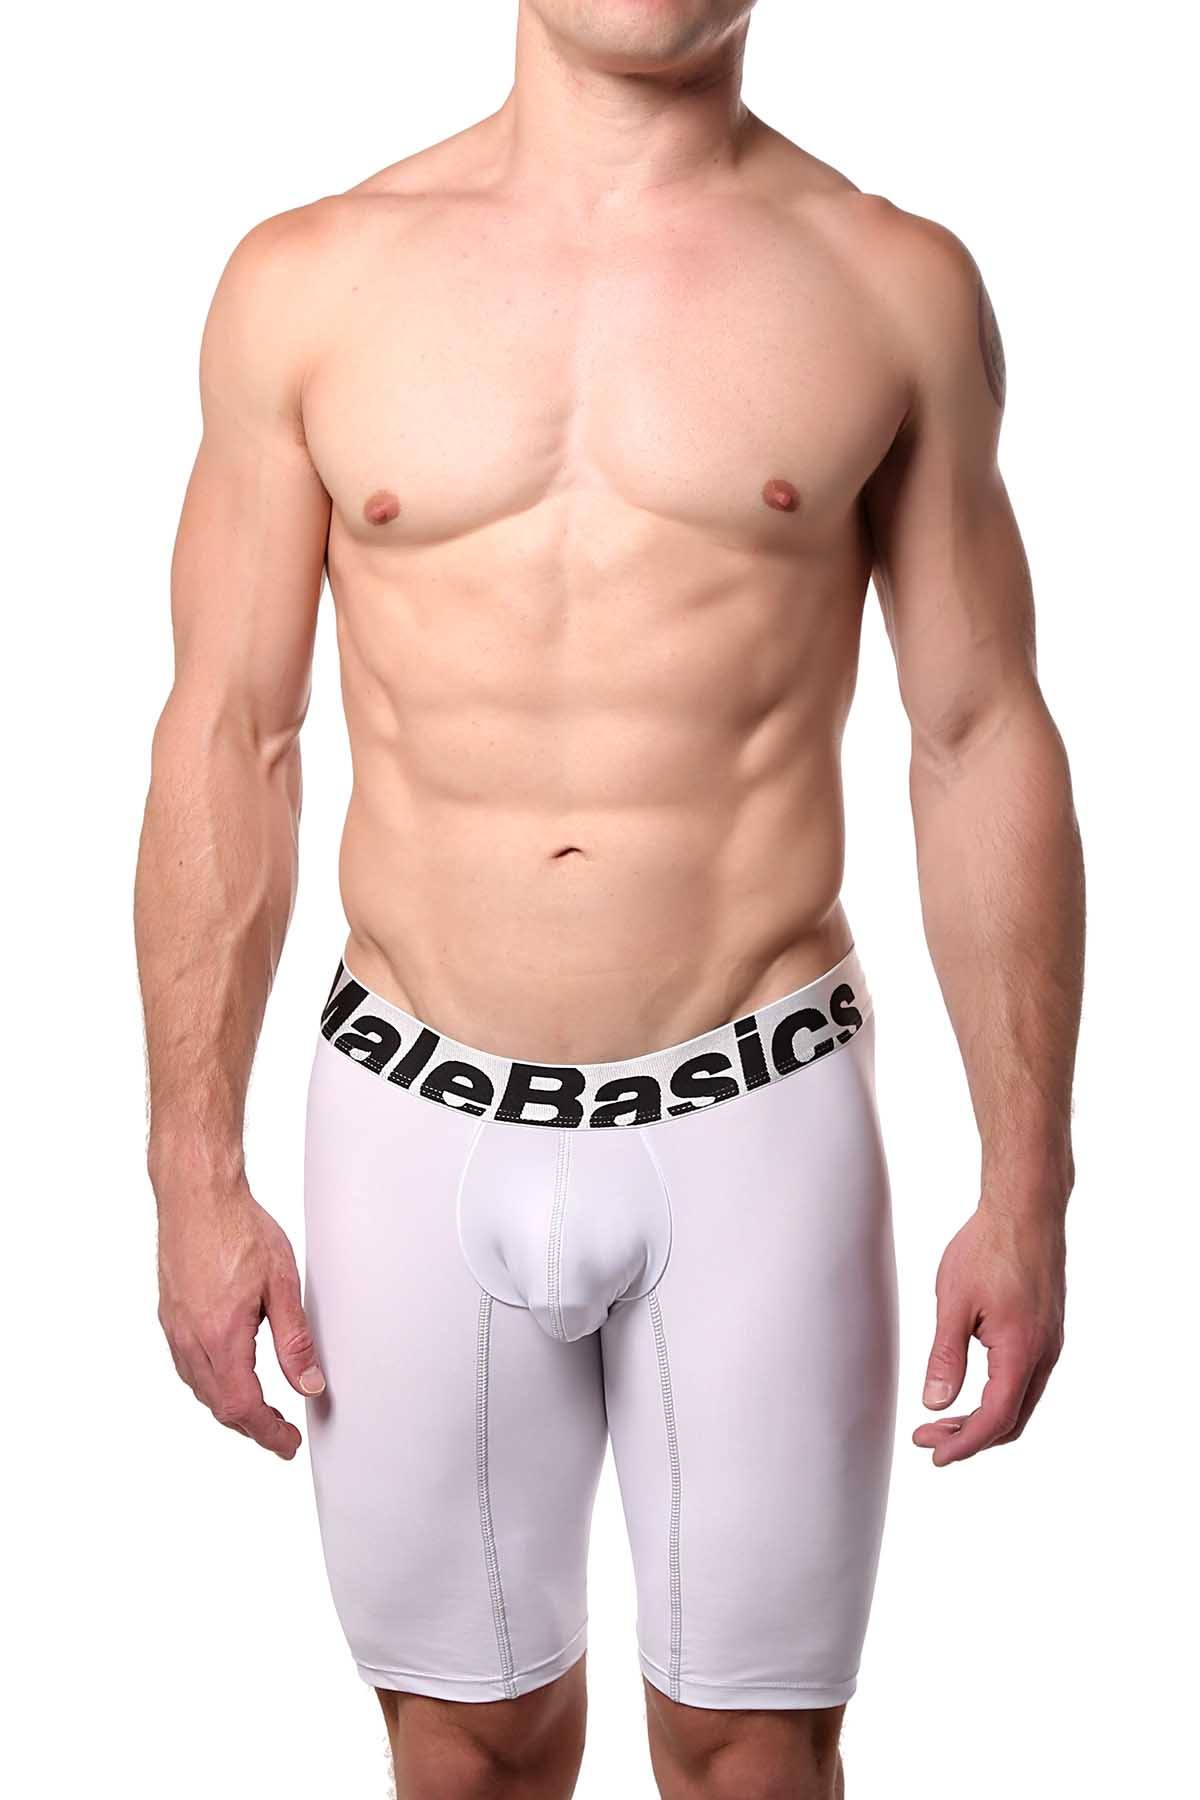 Male Basics White Microfiber Athletic Boxer Brief